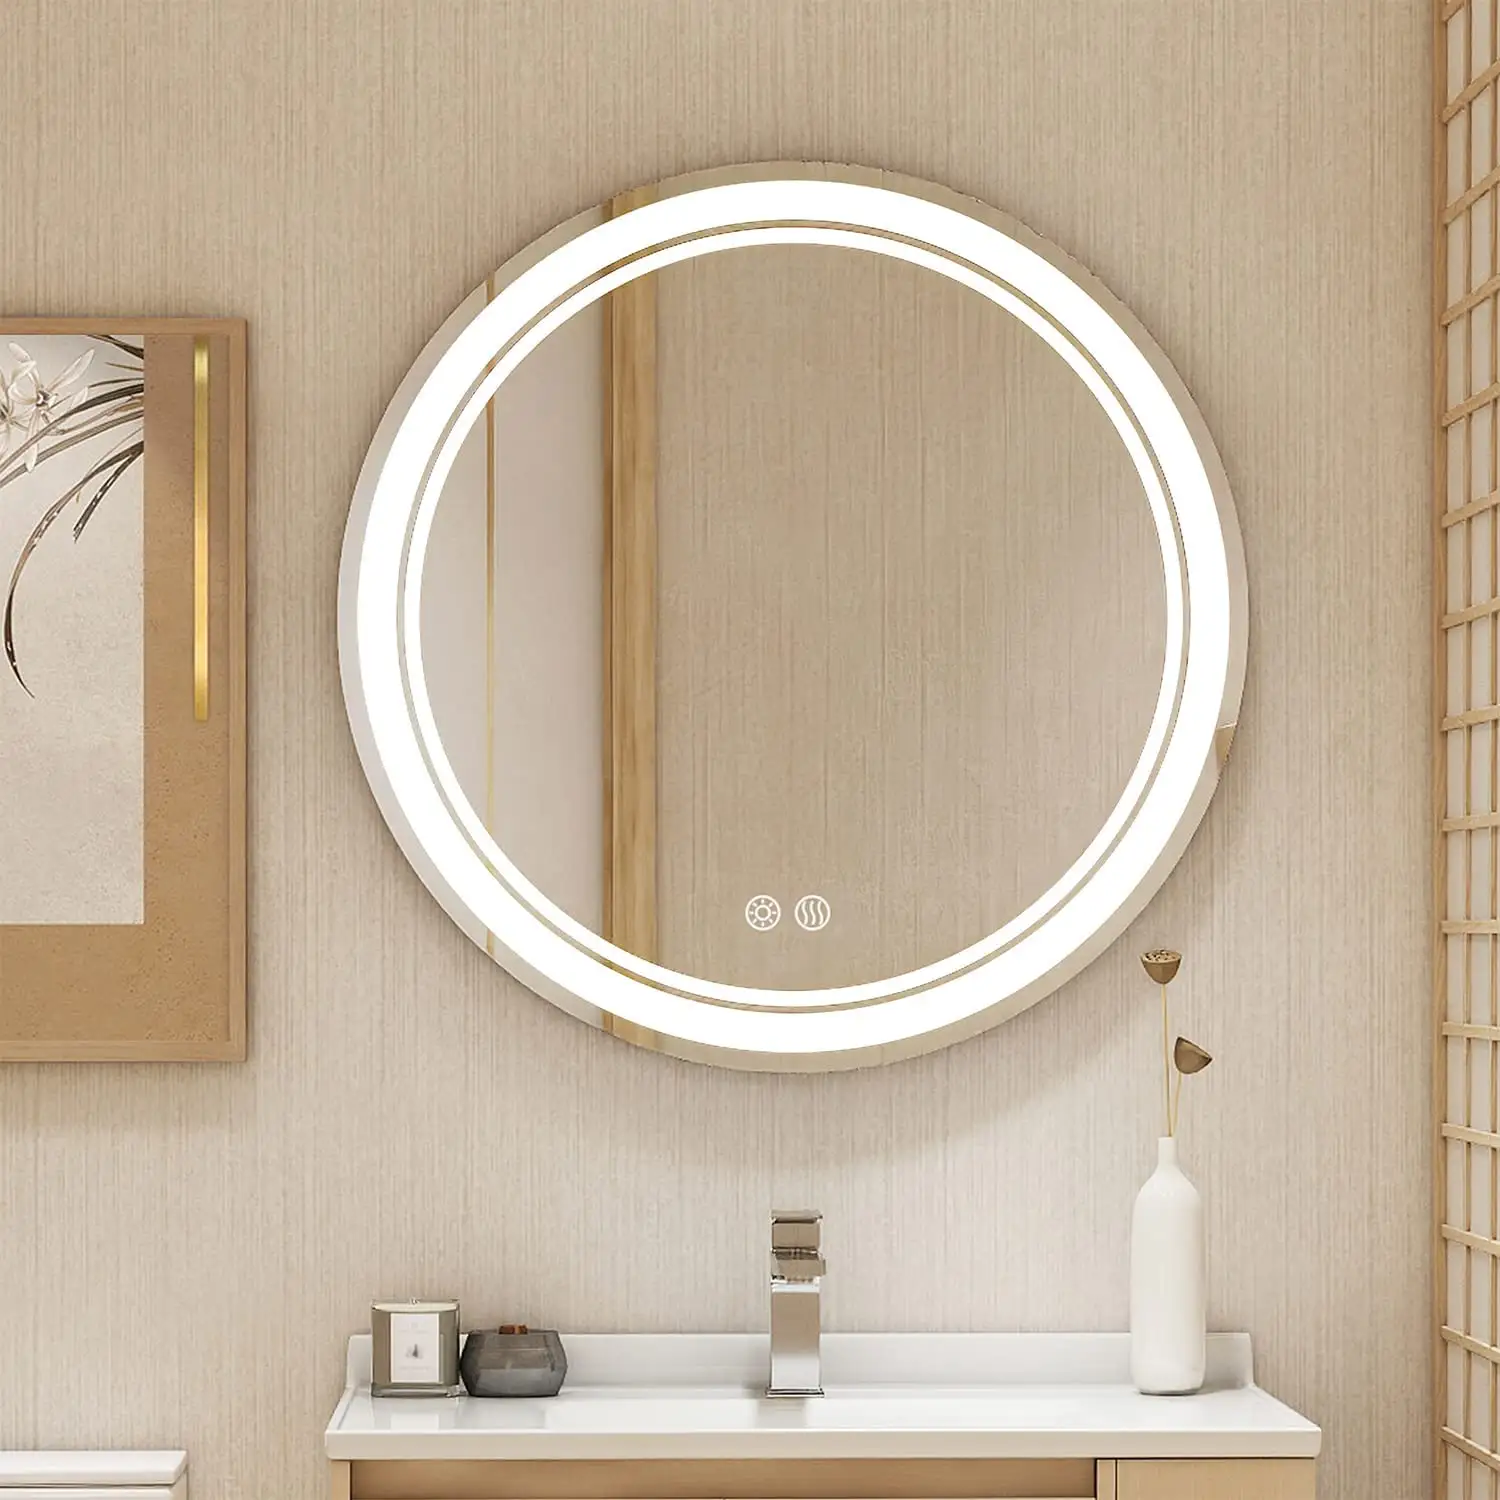 YIDA Round Front Lights LED Mirror Smart Touch Sensor Anti-fog Bath Smart Mirror for Bathroom/Bedroom/Hair Salon